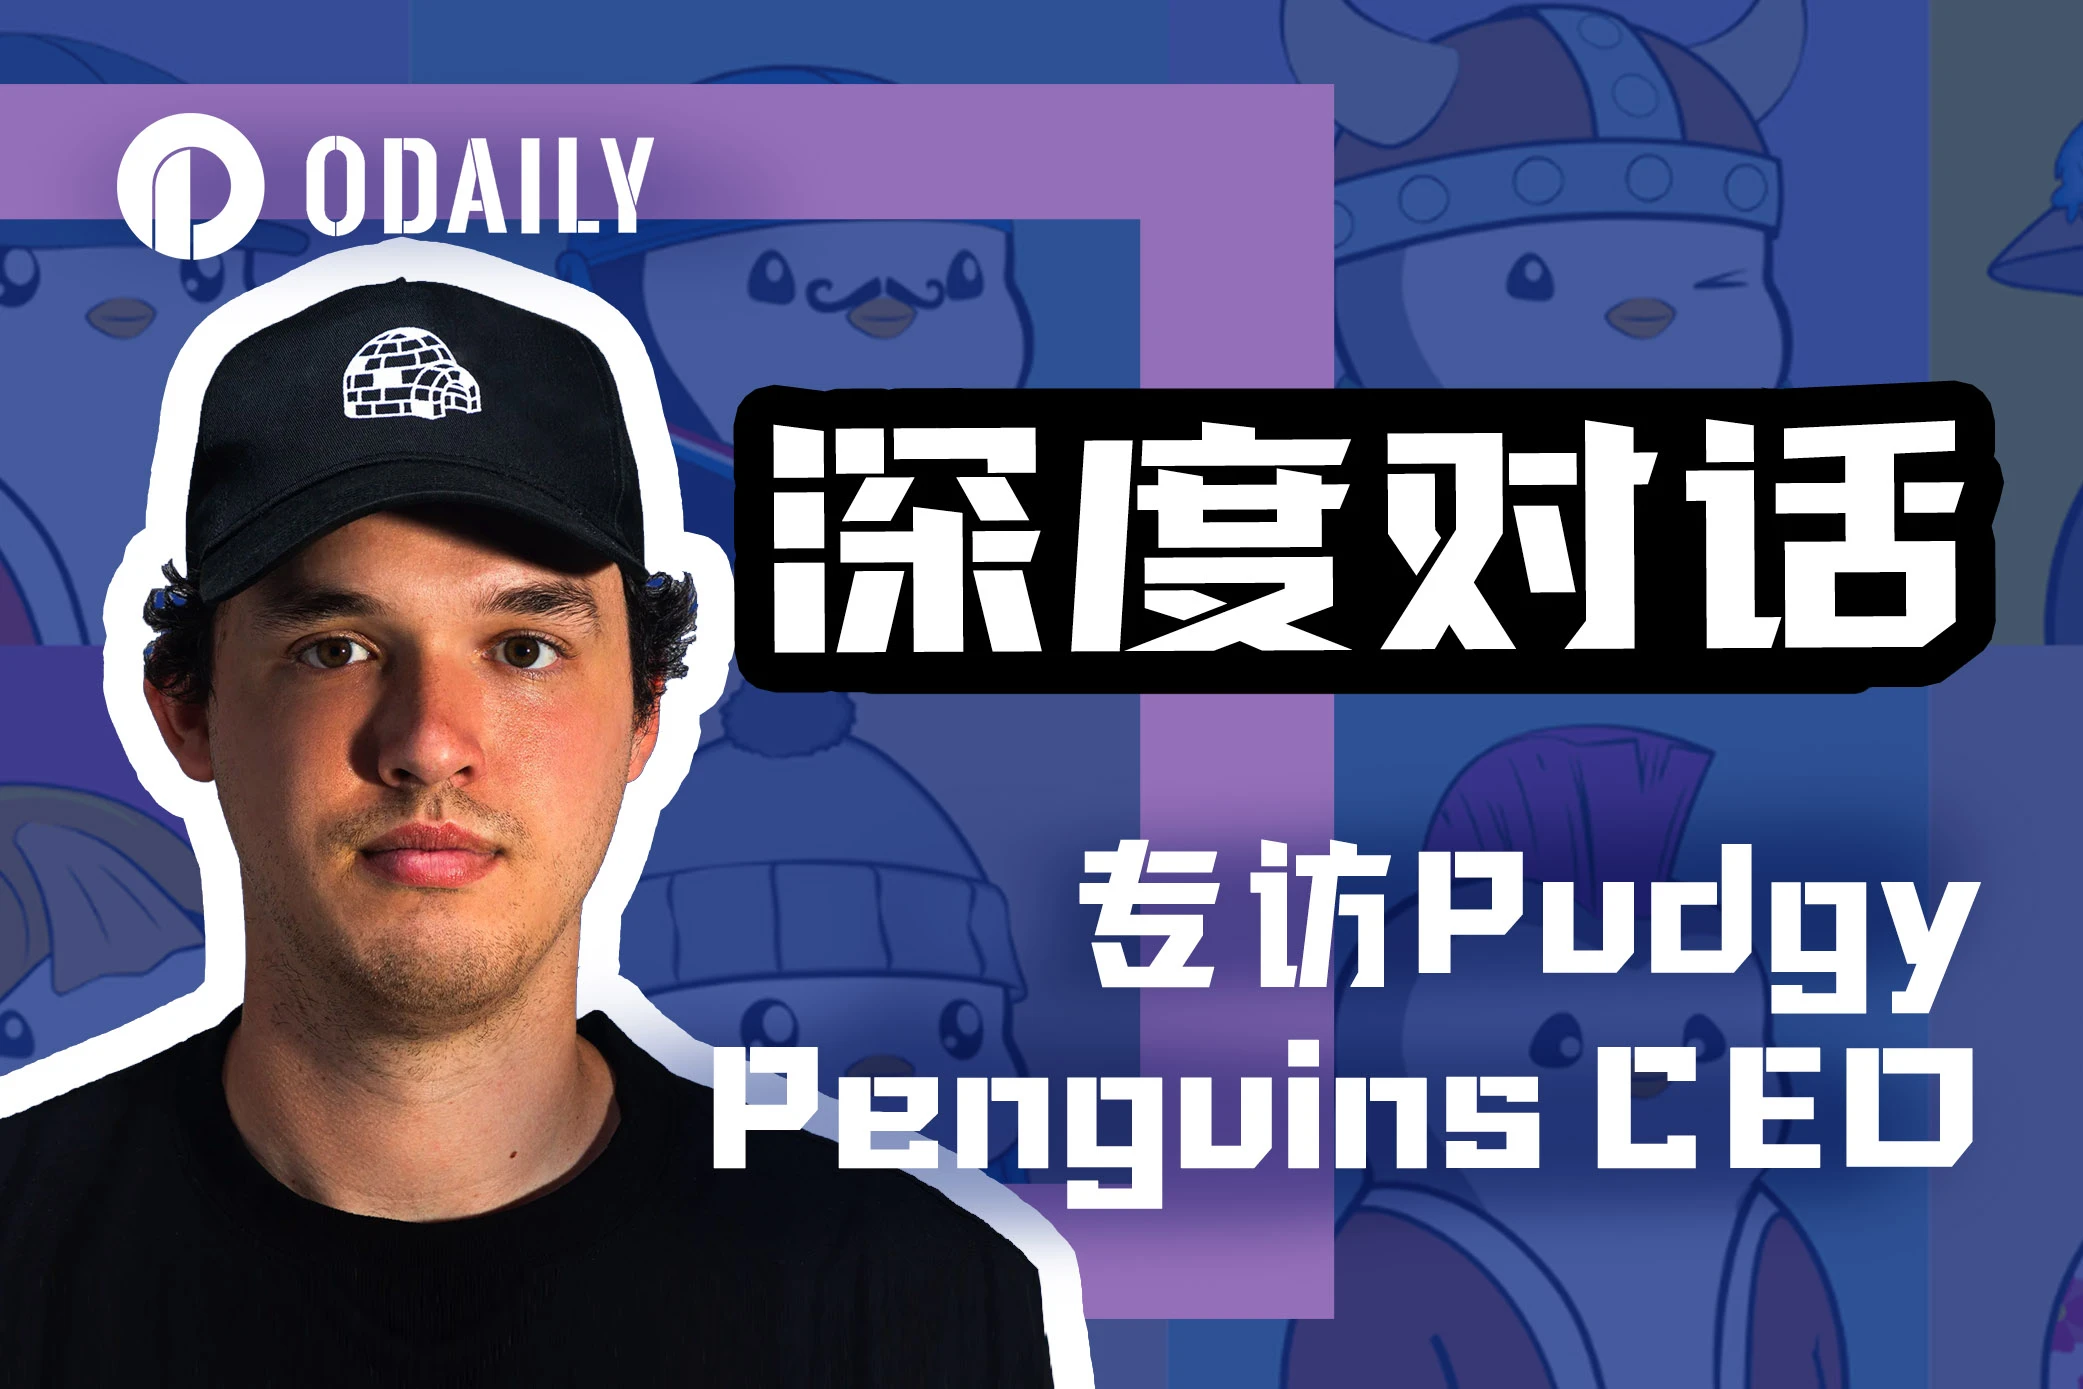 Odaily专访Pudgy Penguins CEO：胖企鹅是所有人都会爱的形象